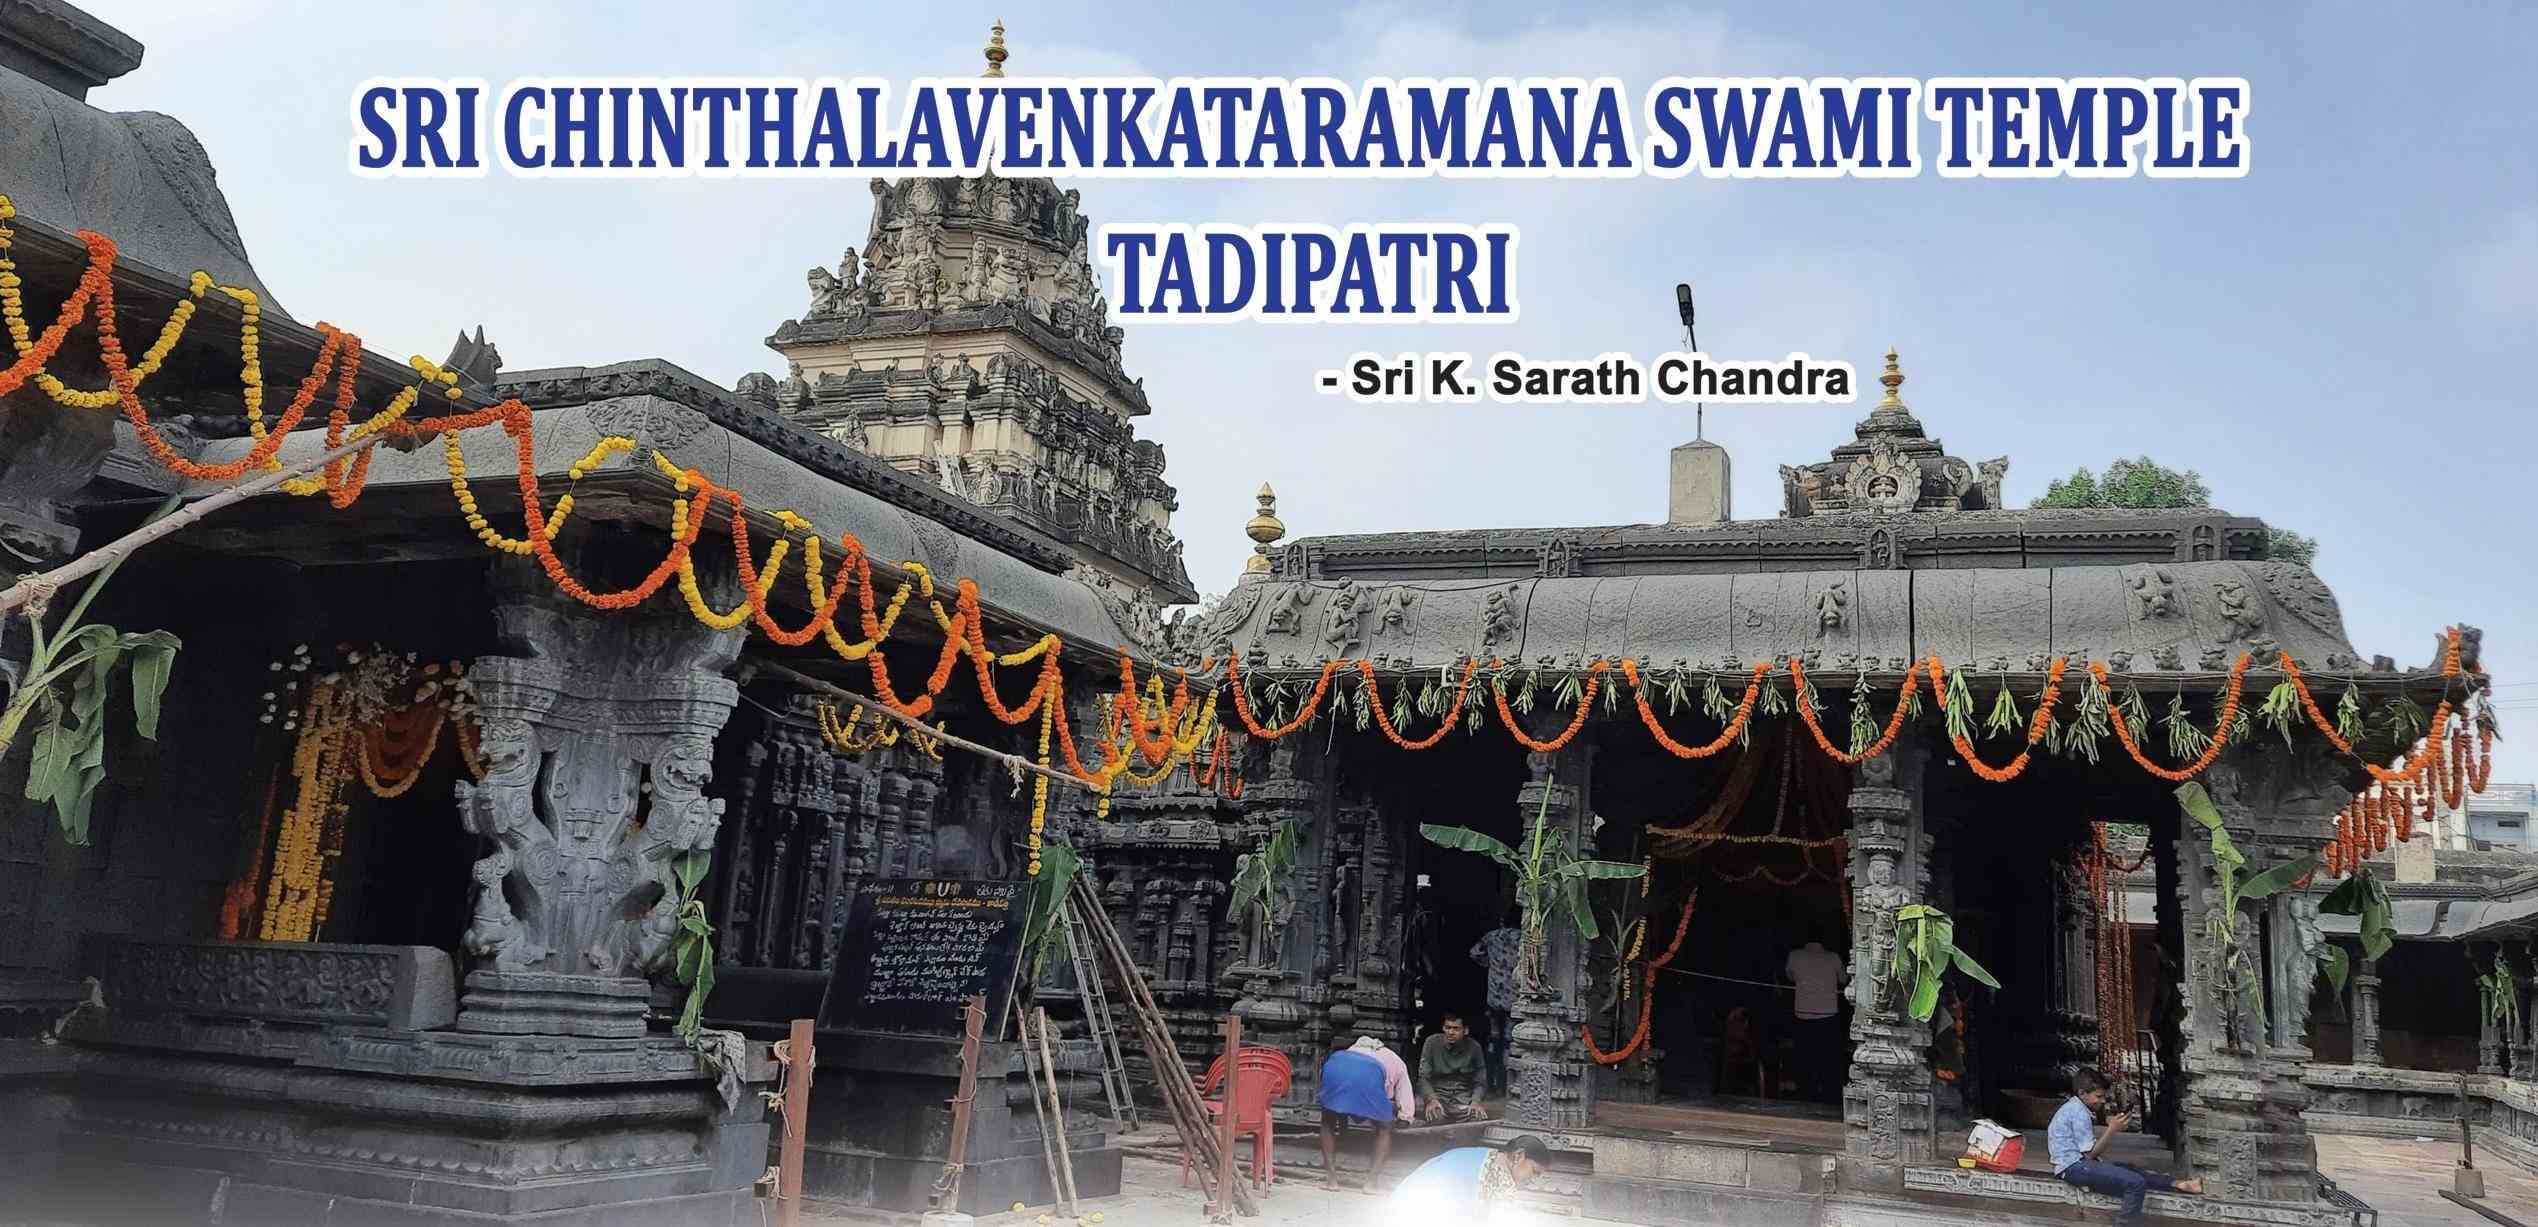 Sri Chinthala Venkataramana Swamy Temple, Tadipatri